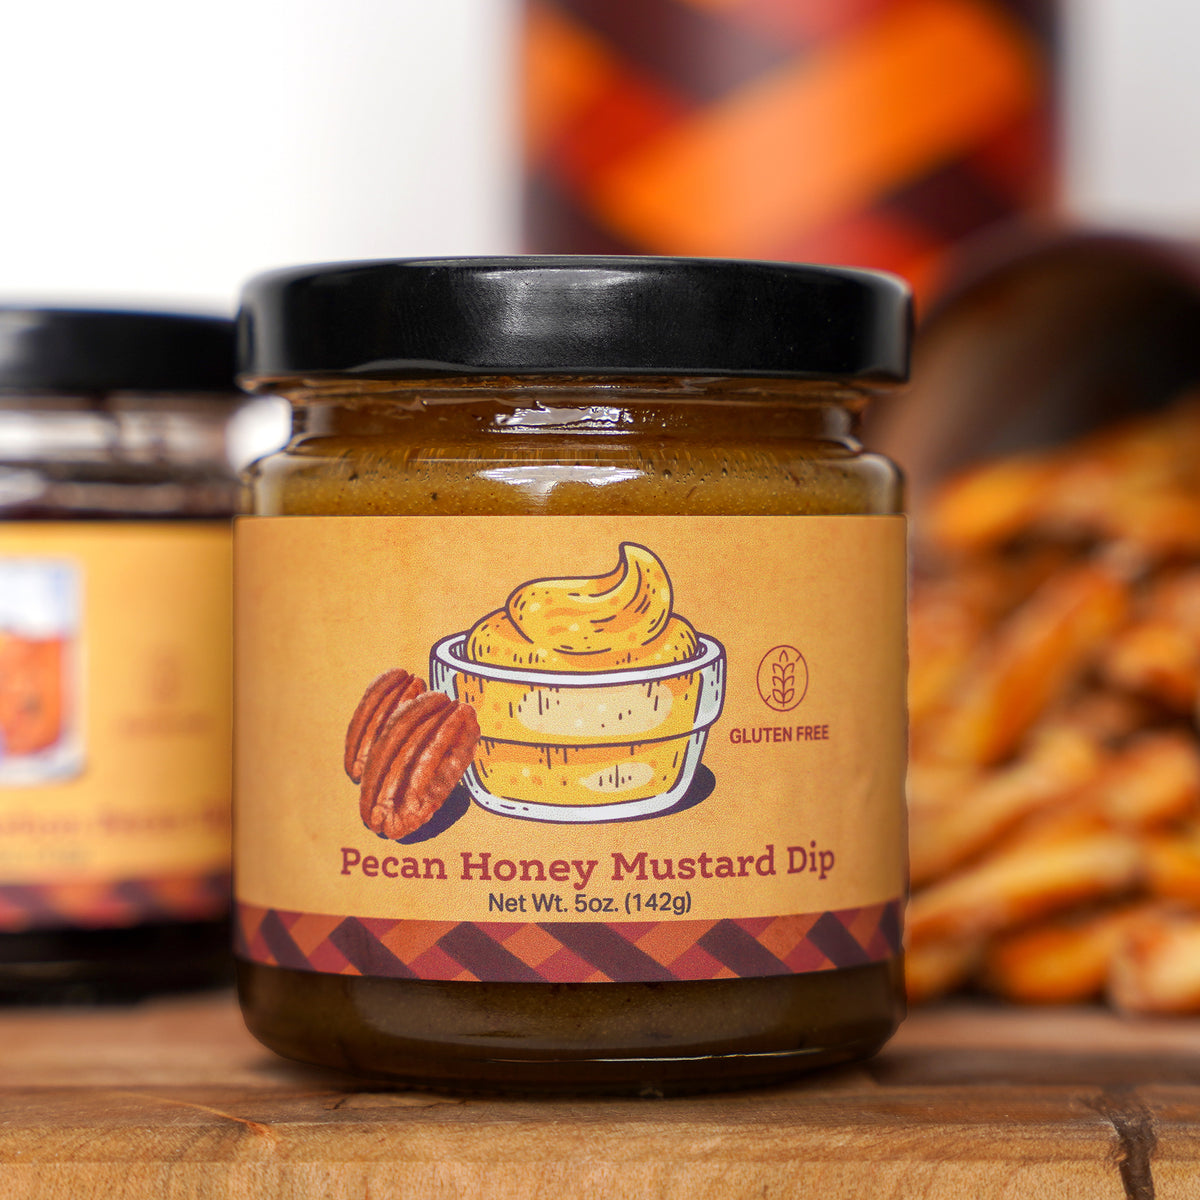 Blueberry Bourbon Pecan & Pecan Honey Mustard Artisanal Dips